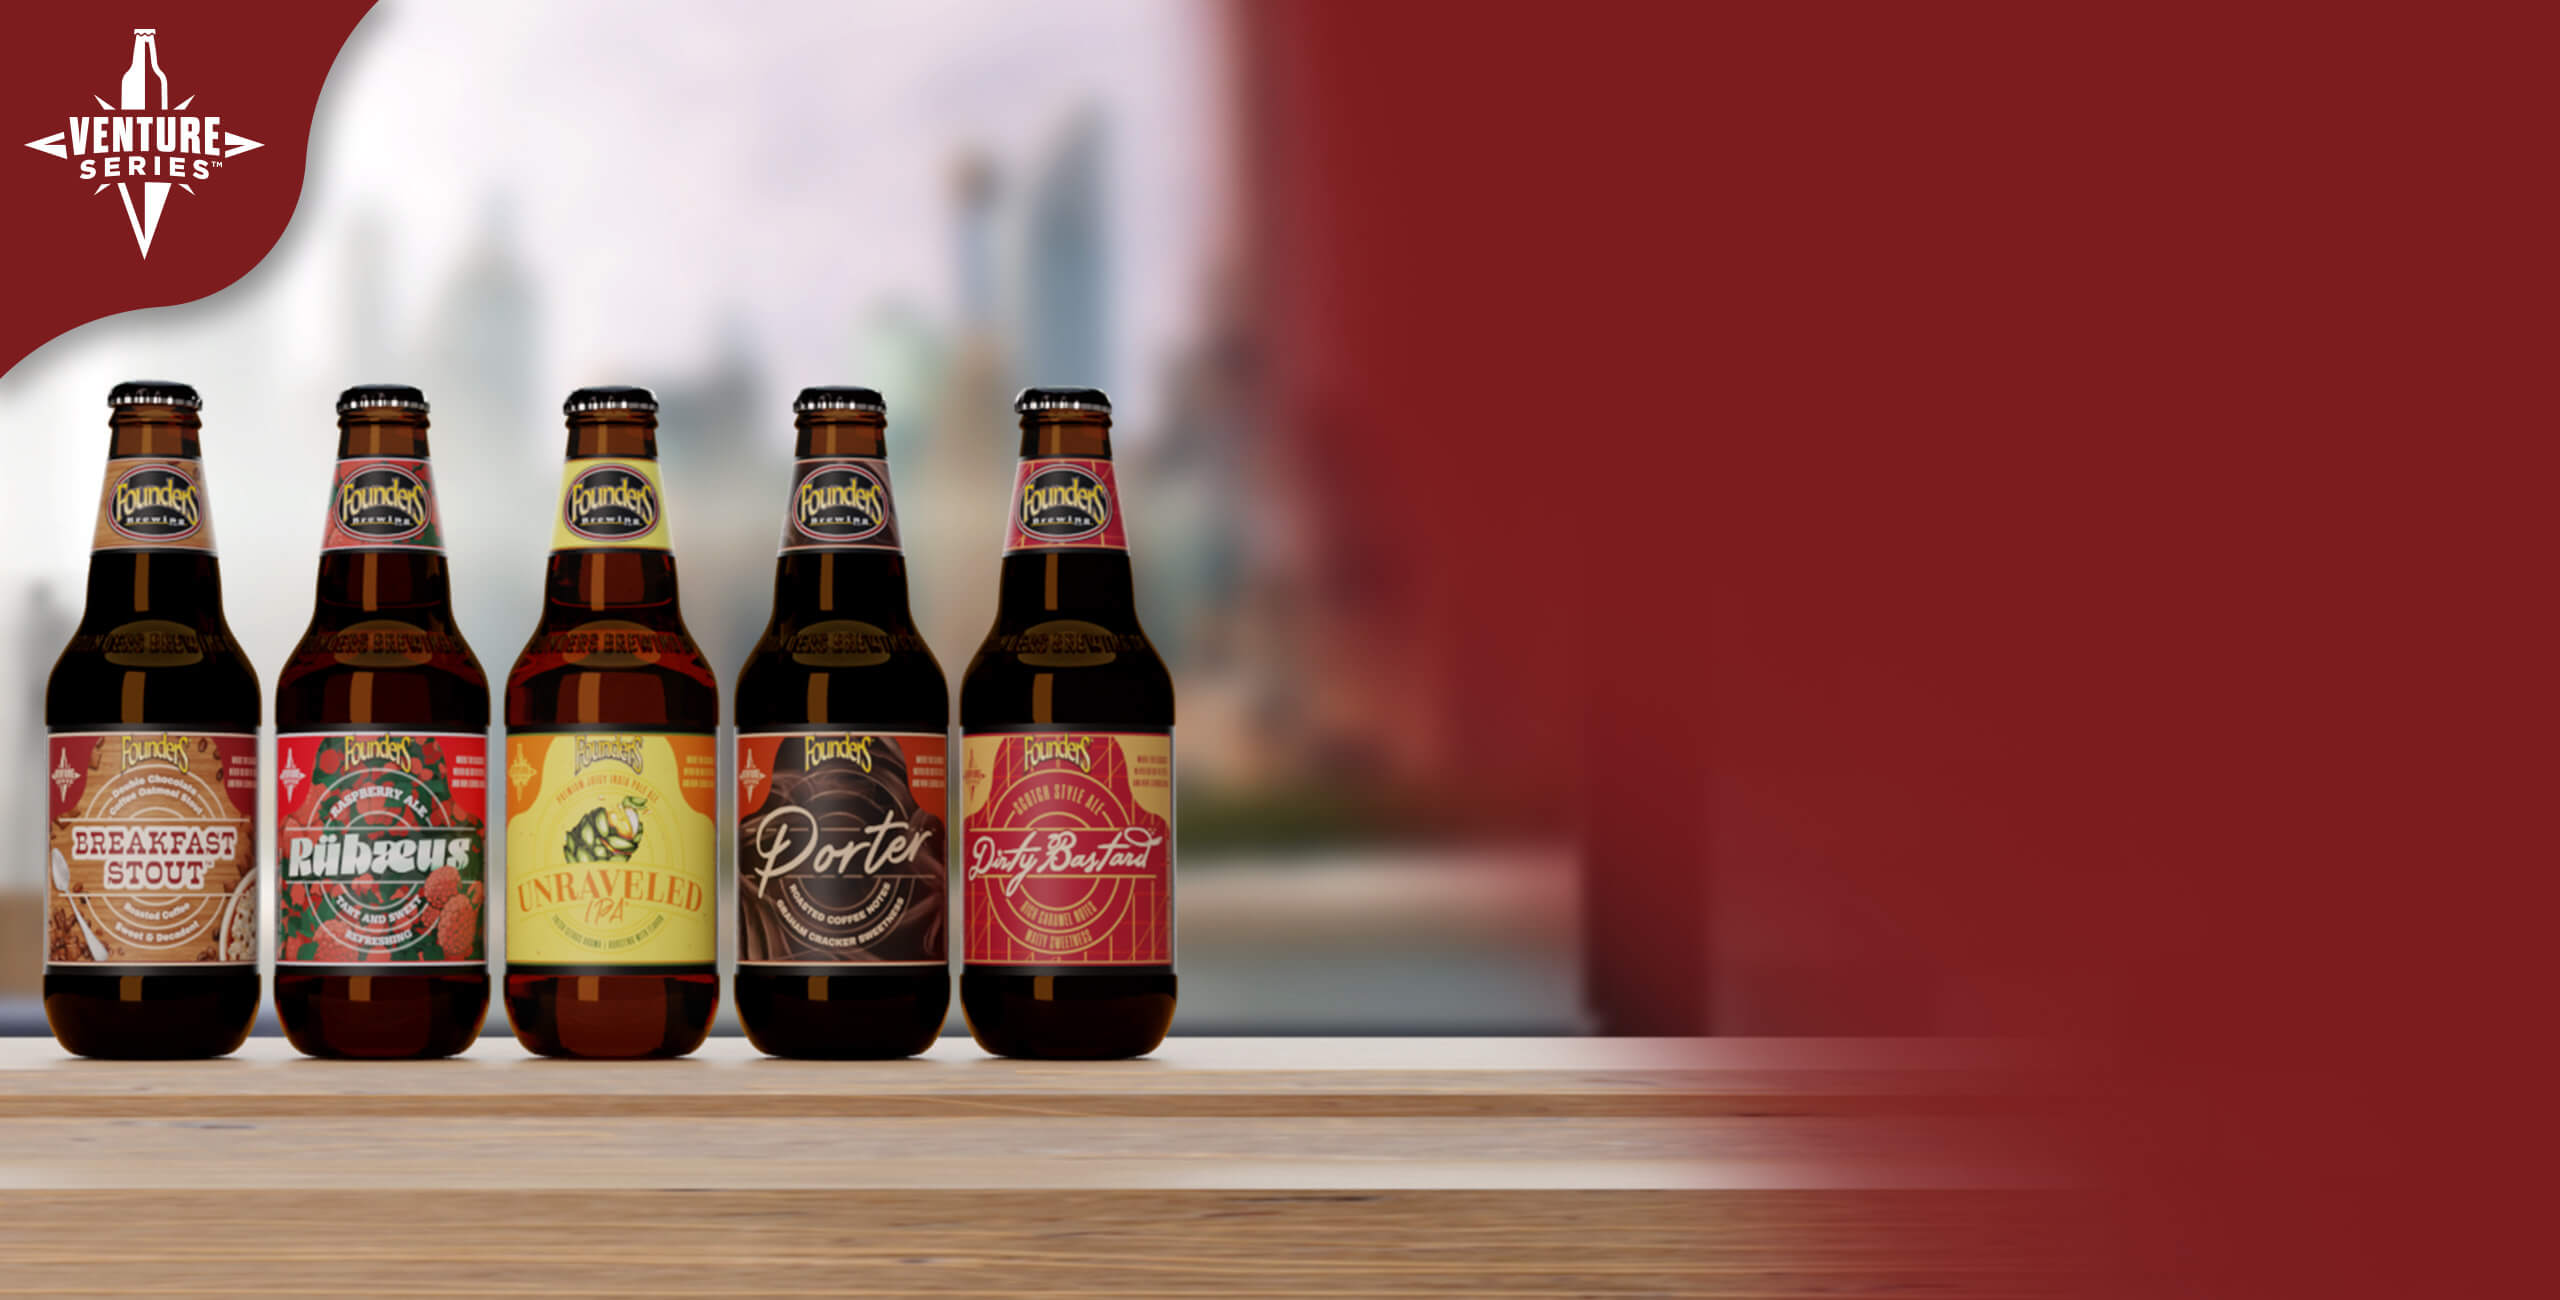 Venture Series beers in bottles lineup and logo mark